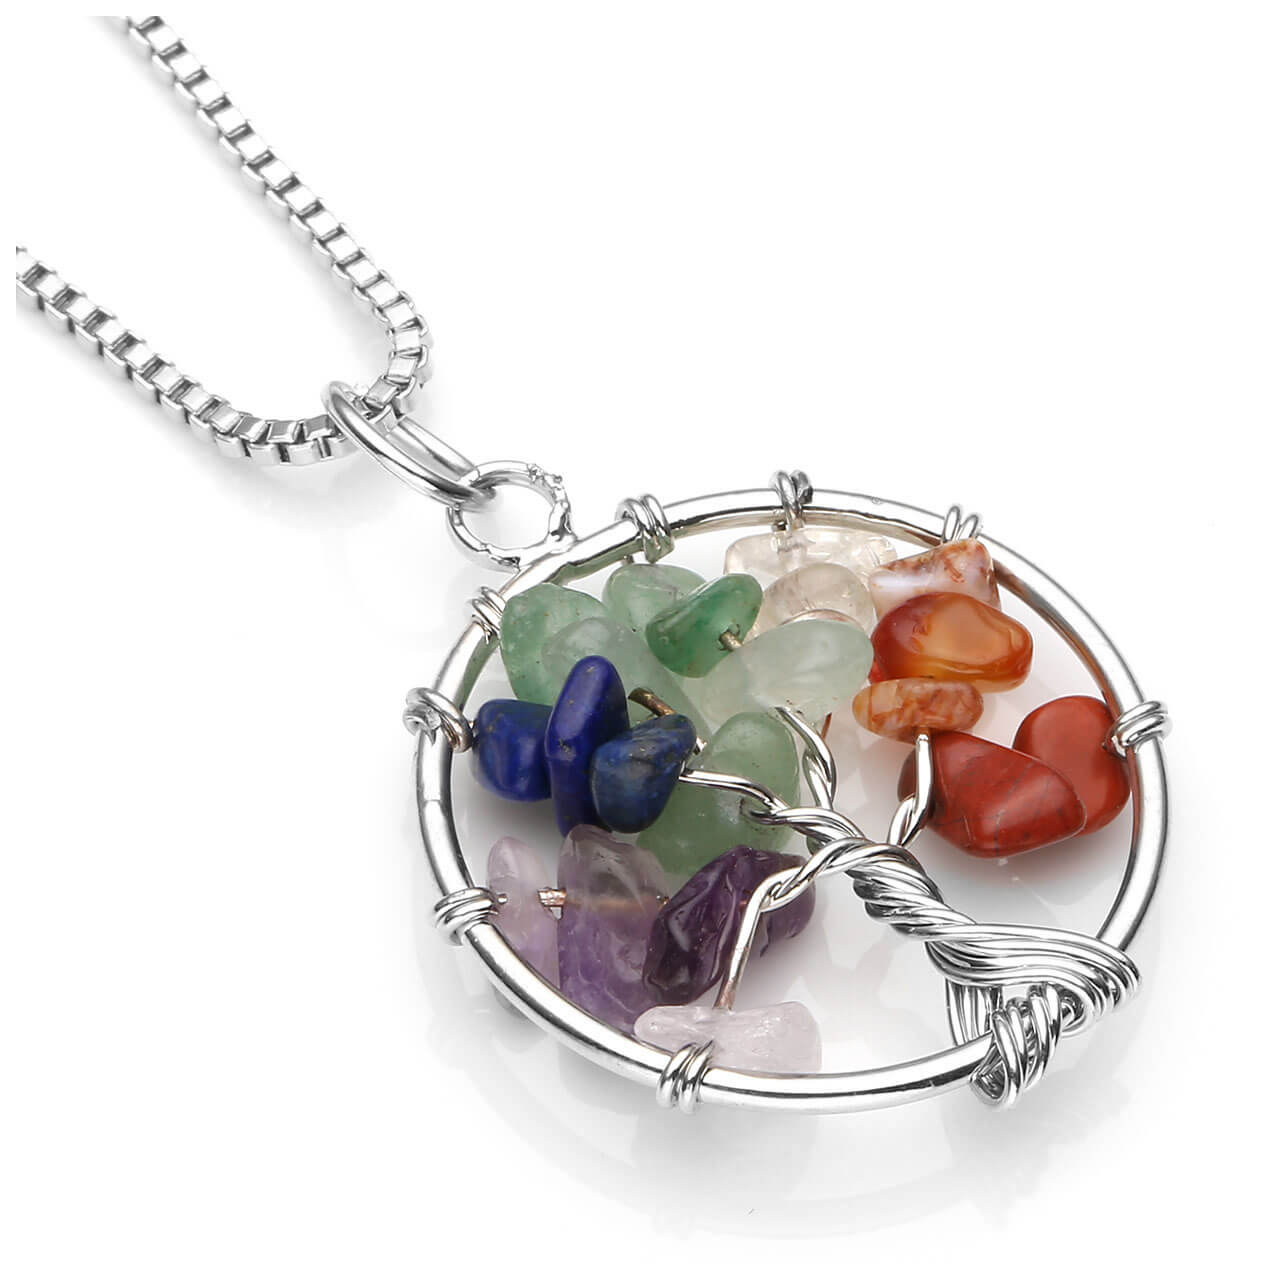 Jovivi personalize customize 7 Chakras Gemstone Charms Crystal Quartz Tree of Life Pendant Necklace engrave necklace